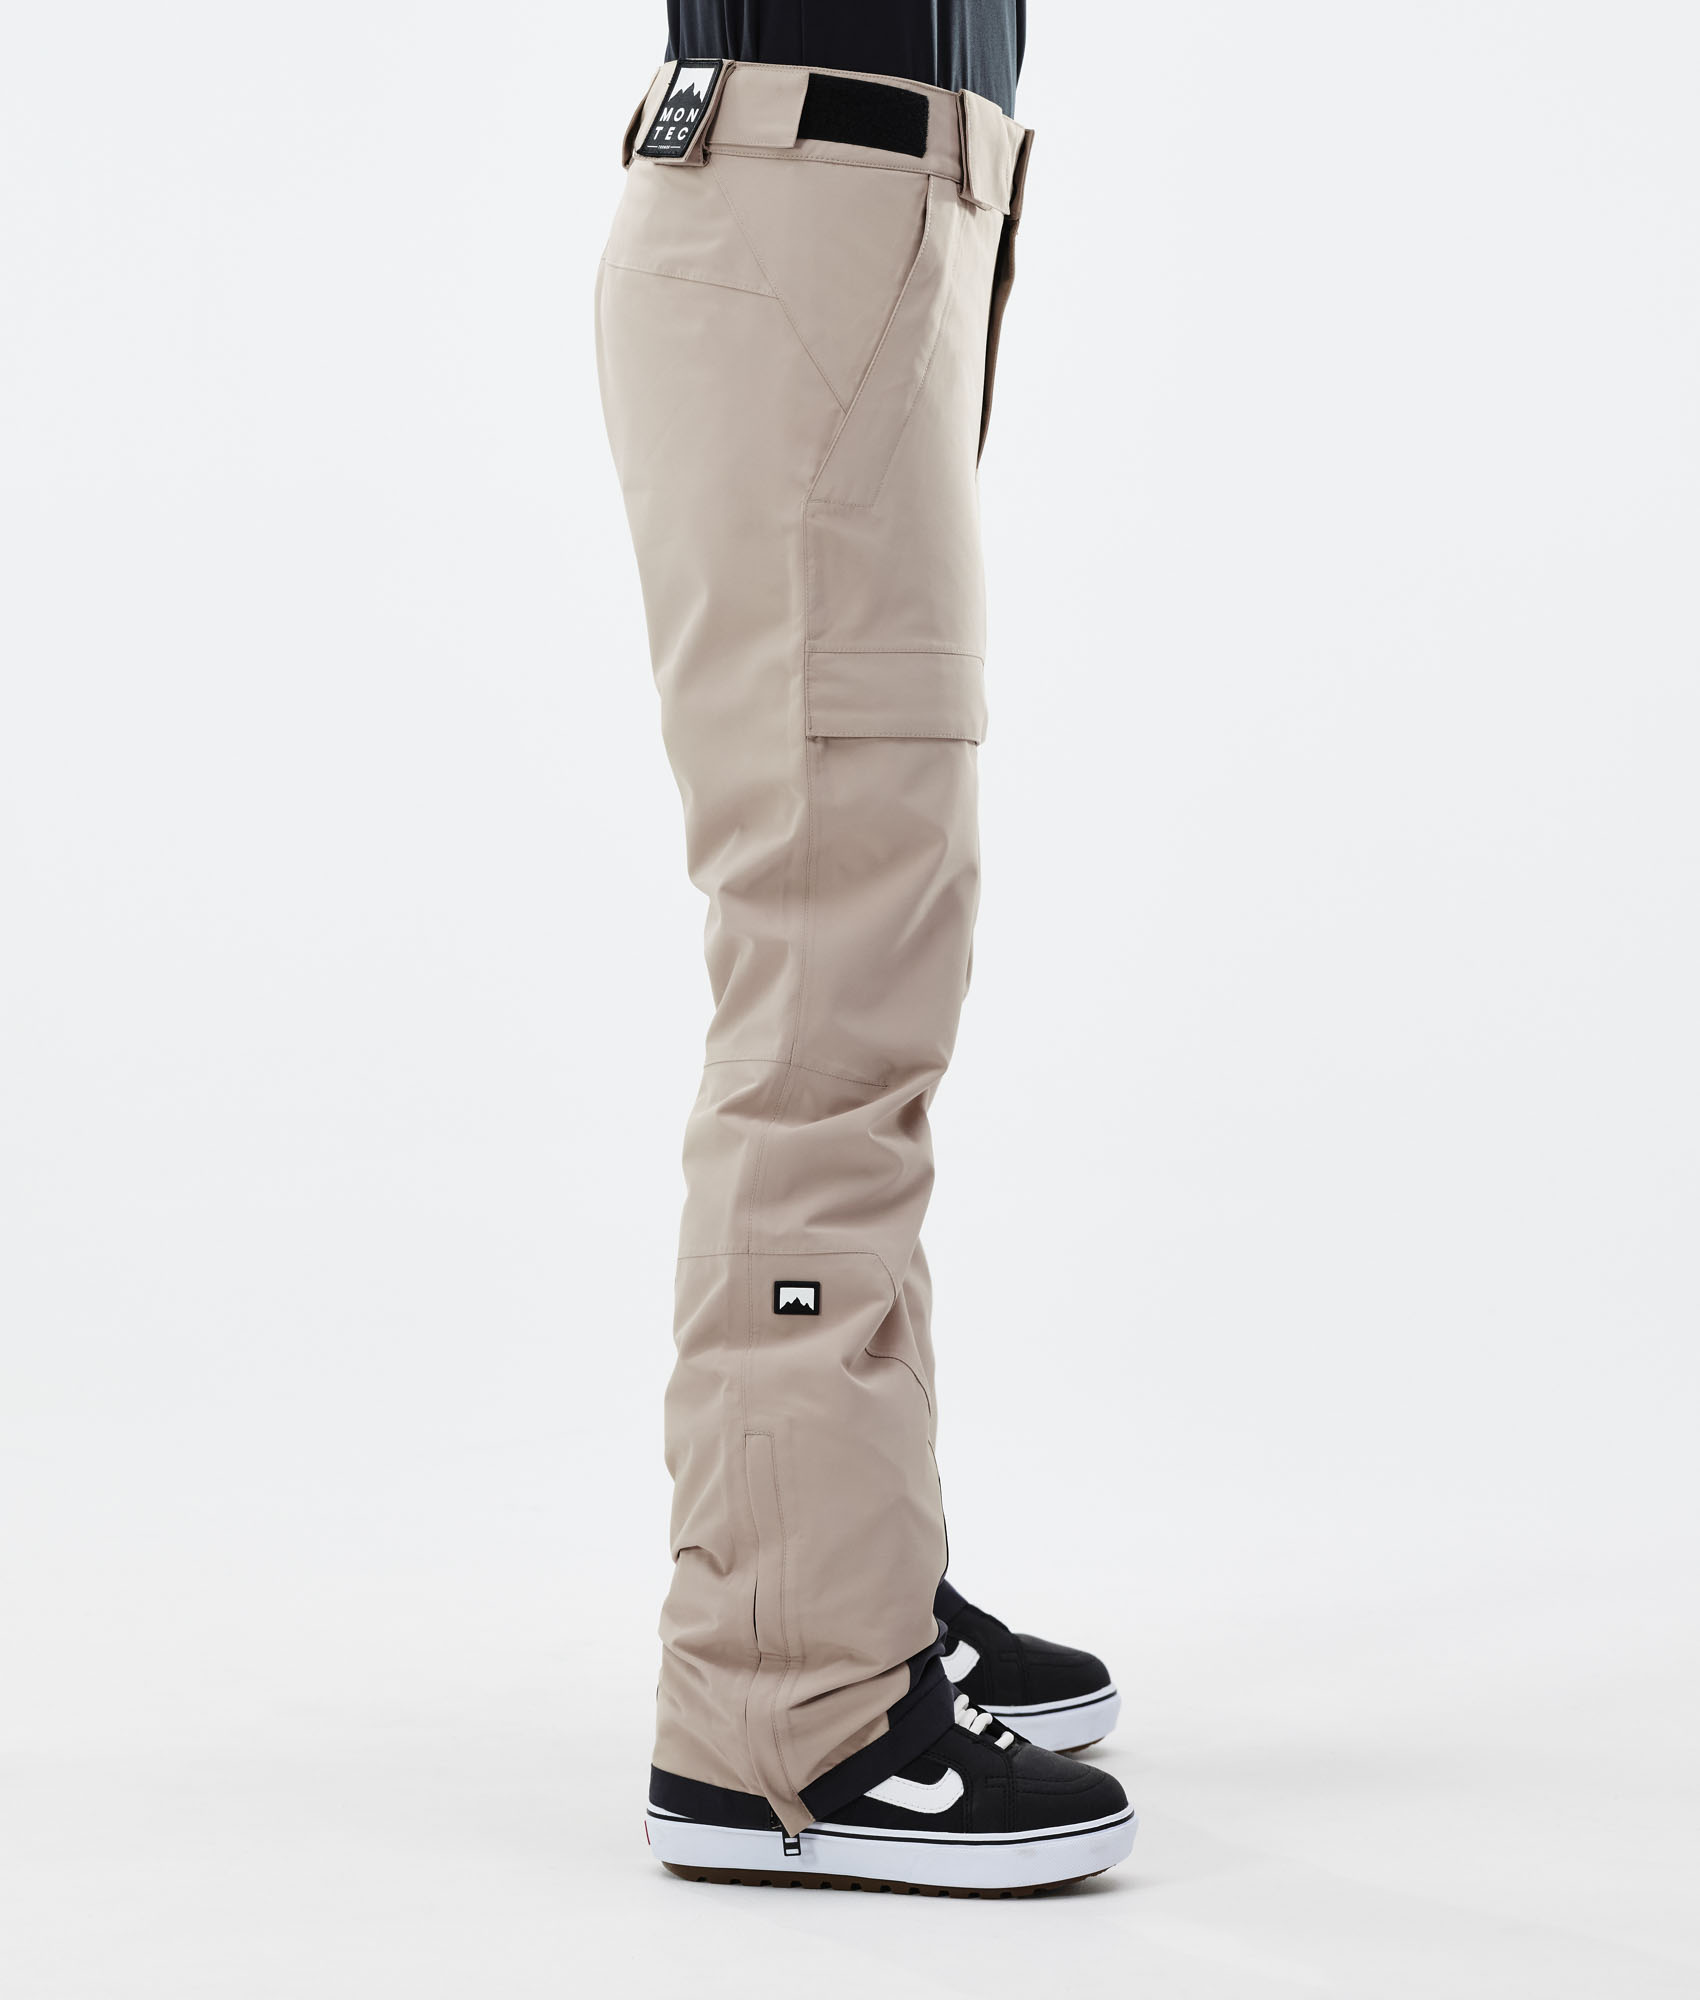 Cuffed Slim Fit Stretch Work Pants - MP703 – Tradestaff Workwear